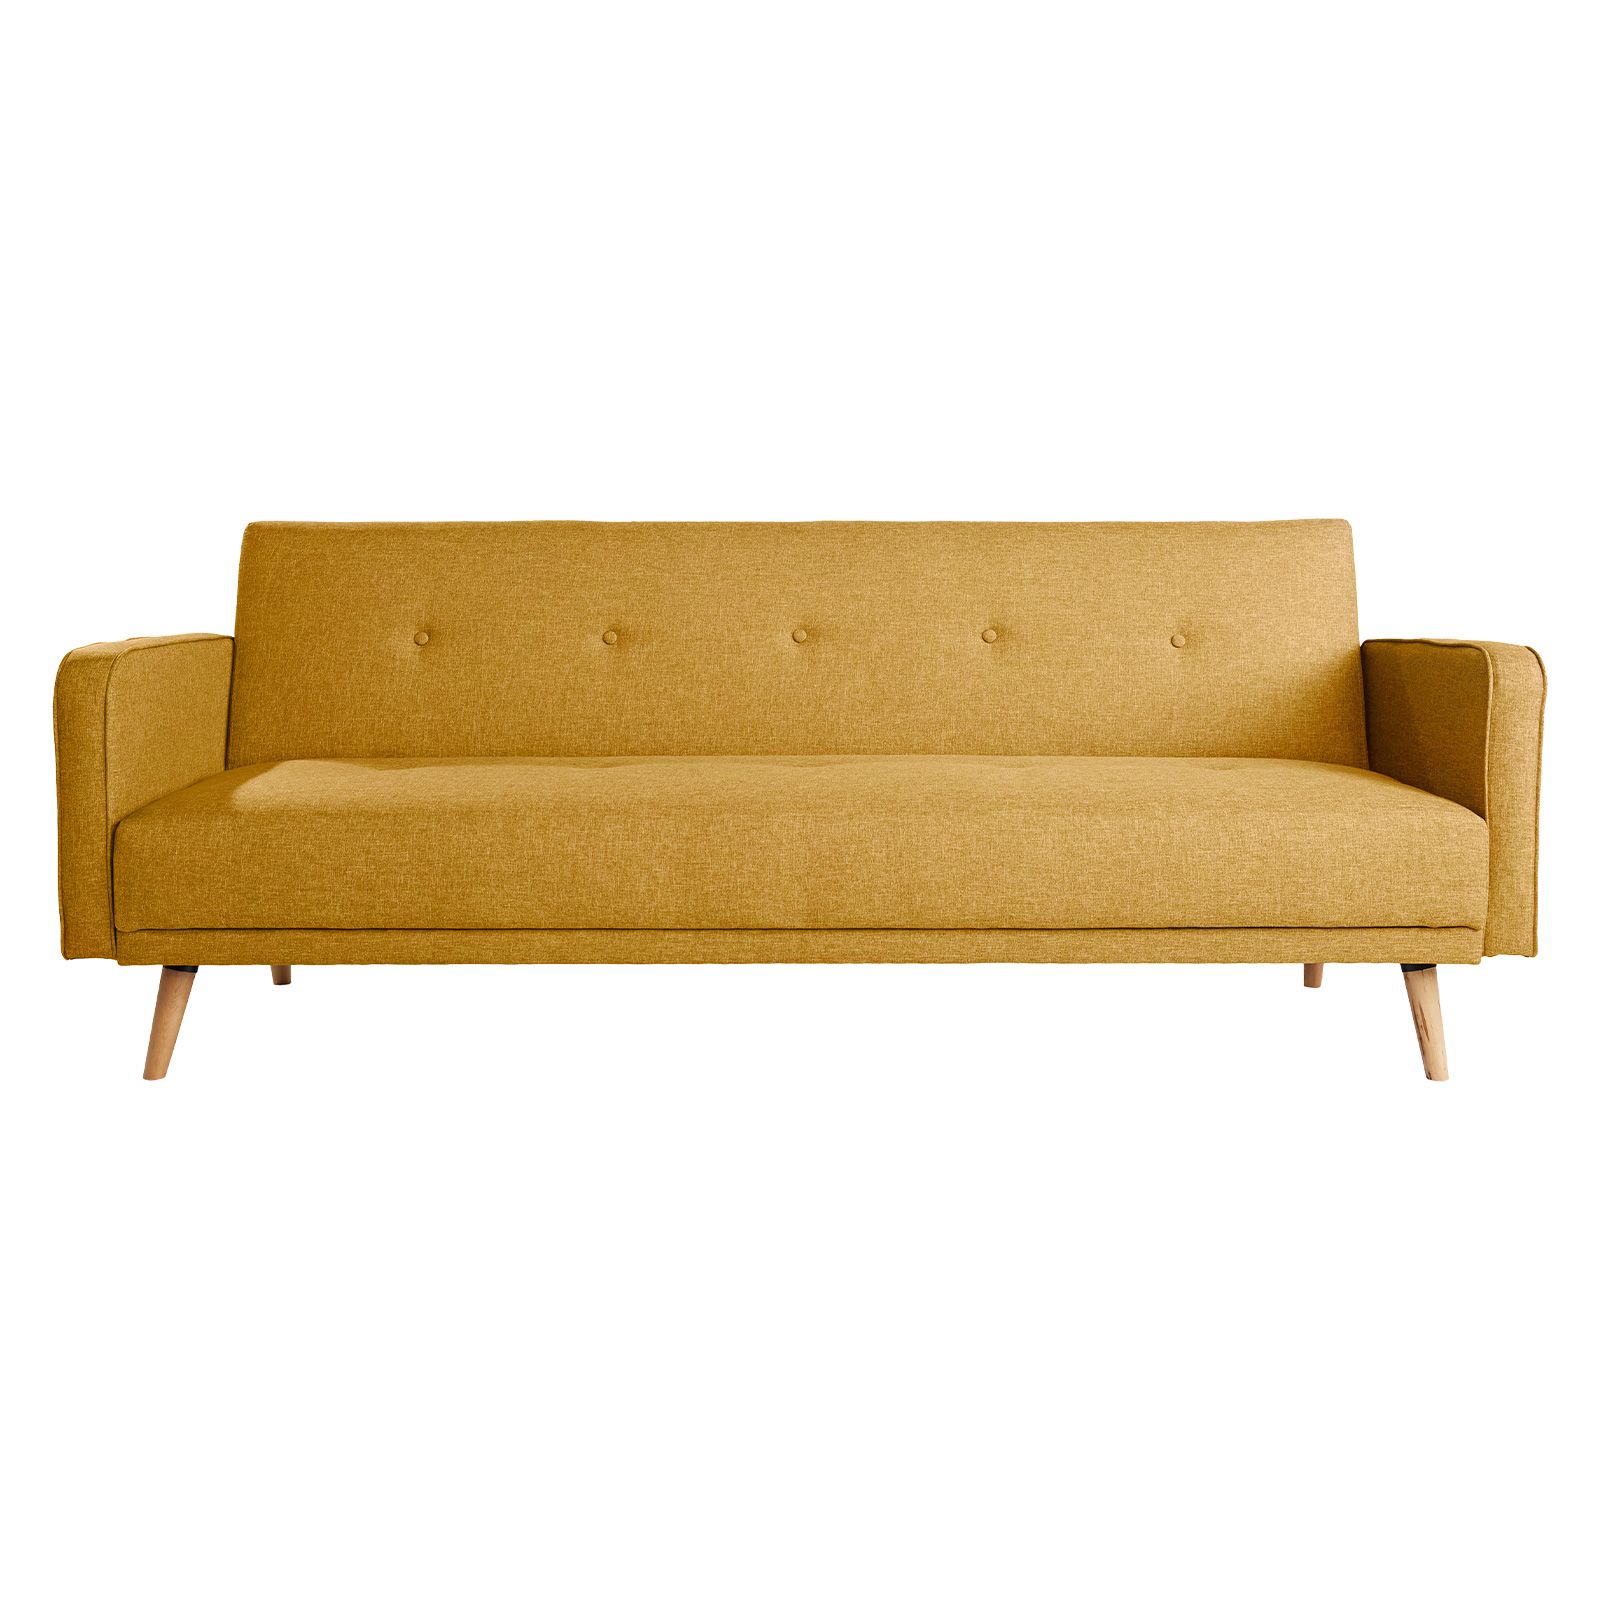 HAMILGON | Sofá cama con brazos tapizado en mostaza (208 x 86 x 81cm)